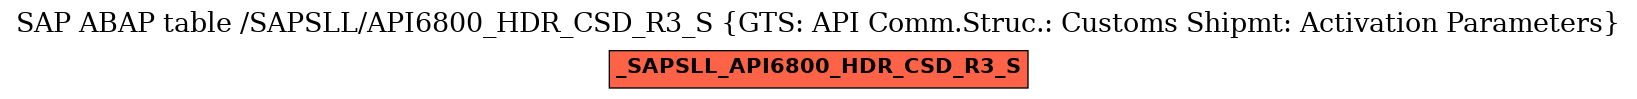 E-R Diagram for table /SAPSLL/API6800_HDR_CSD_R3_S (GTS: API Comm.Struc.: Customs Shipmt: Activation Parameters)